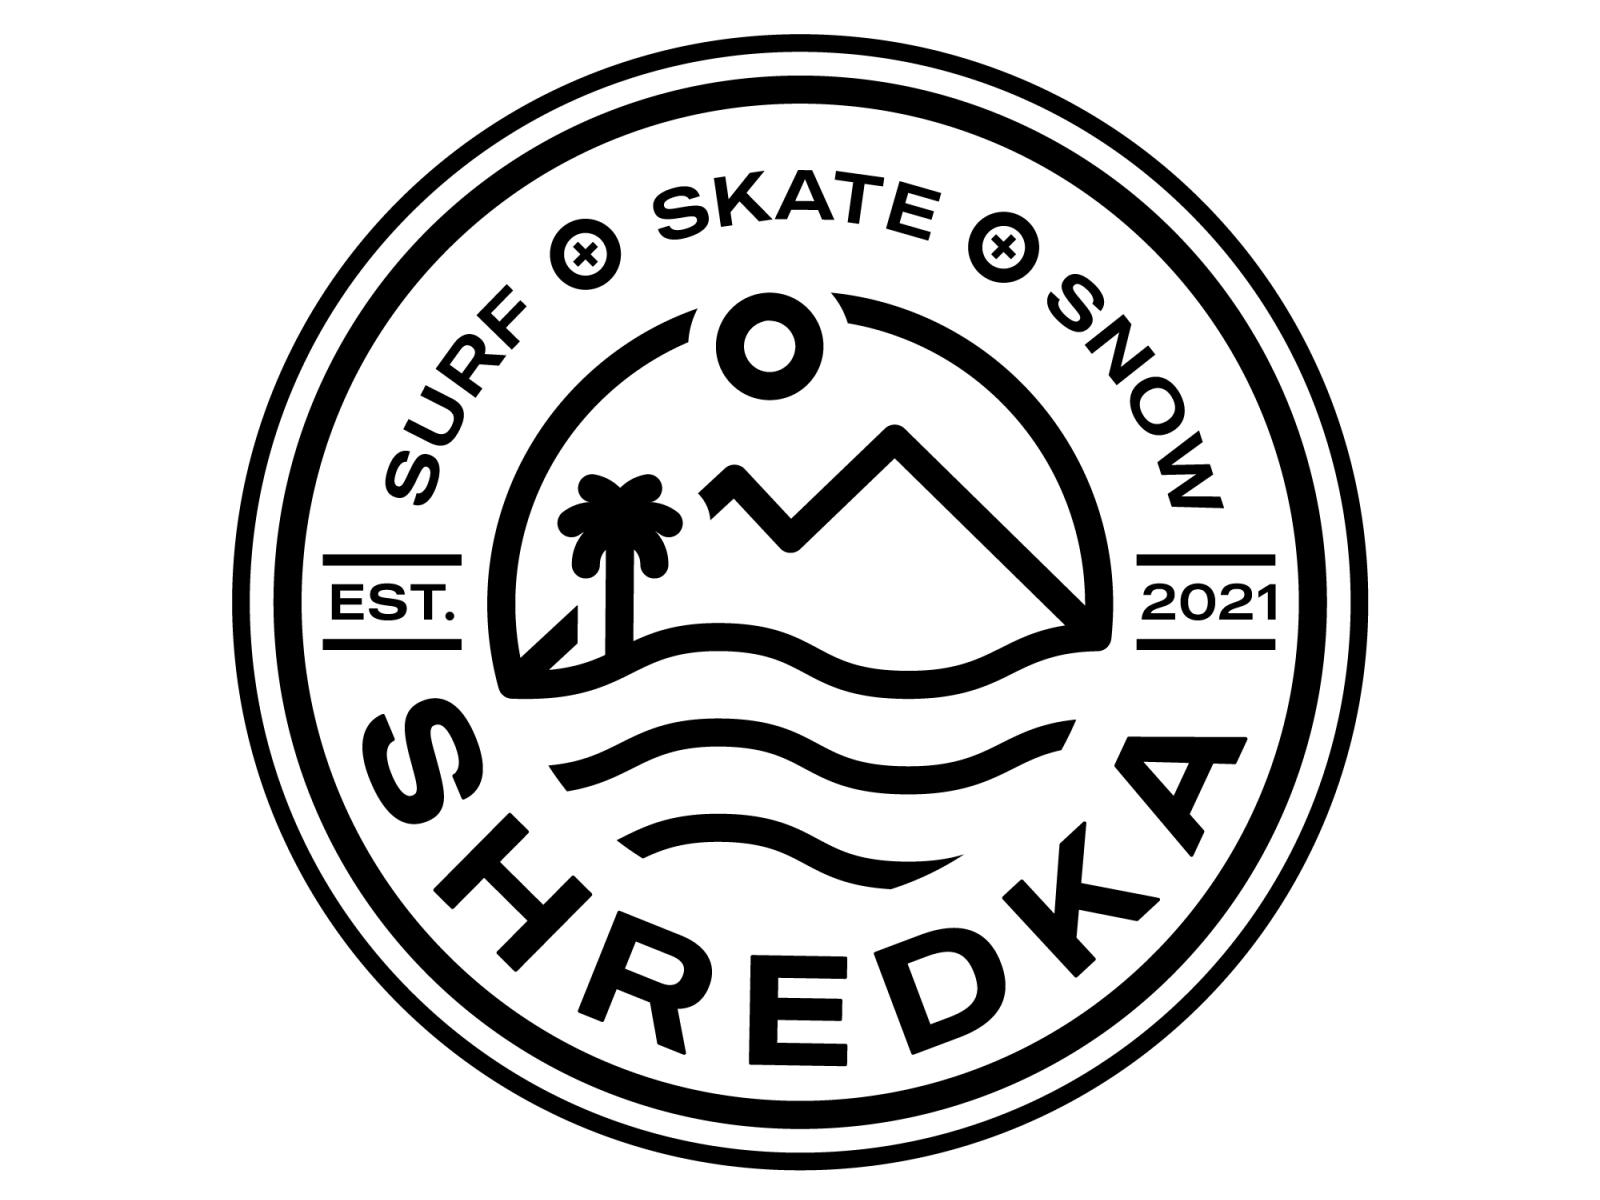 Shredka Logo by Dave Cadario on Dribbble